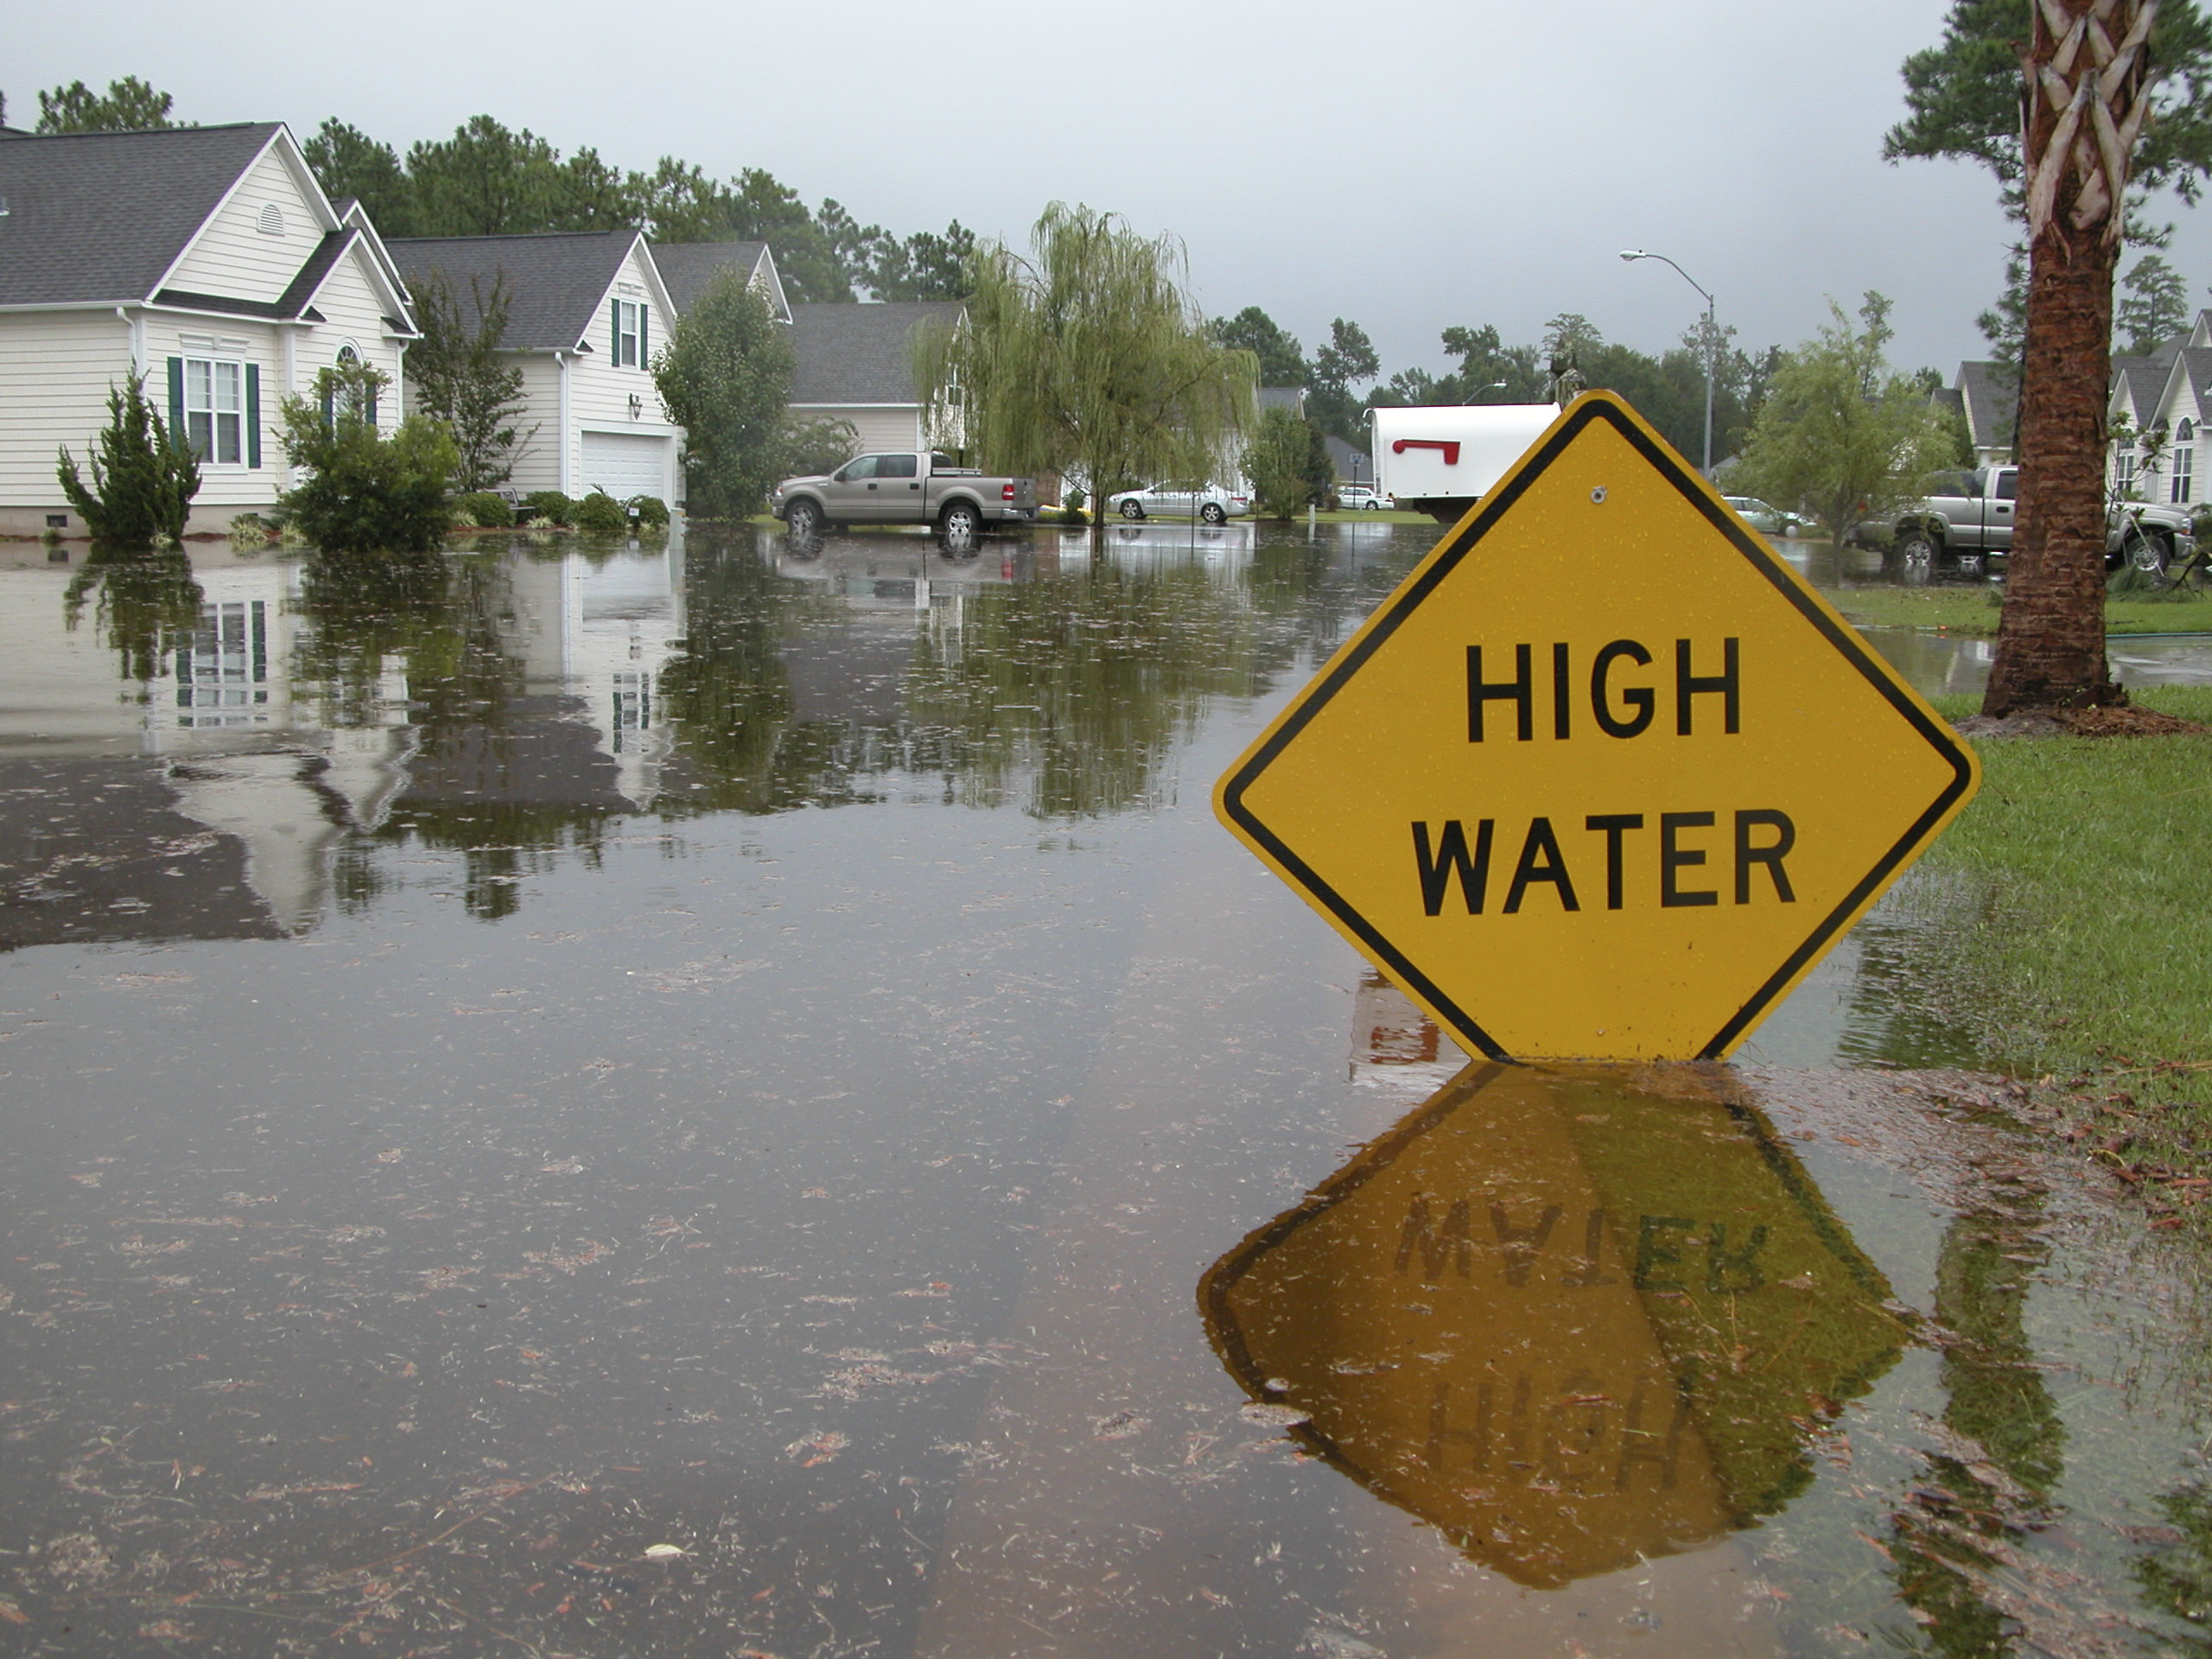 Neighborhood flooded. Sign warns of high water.